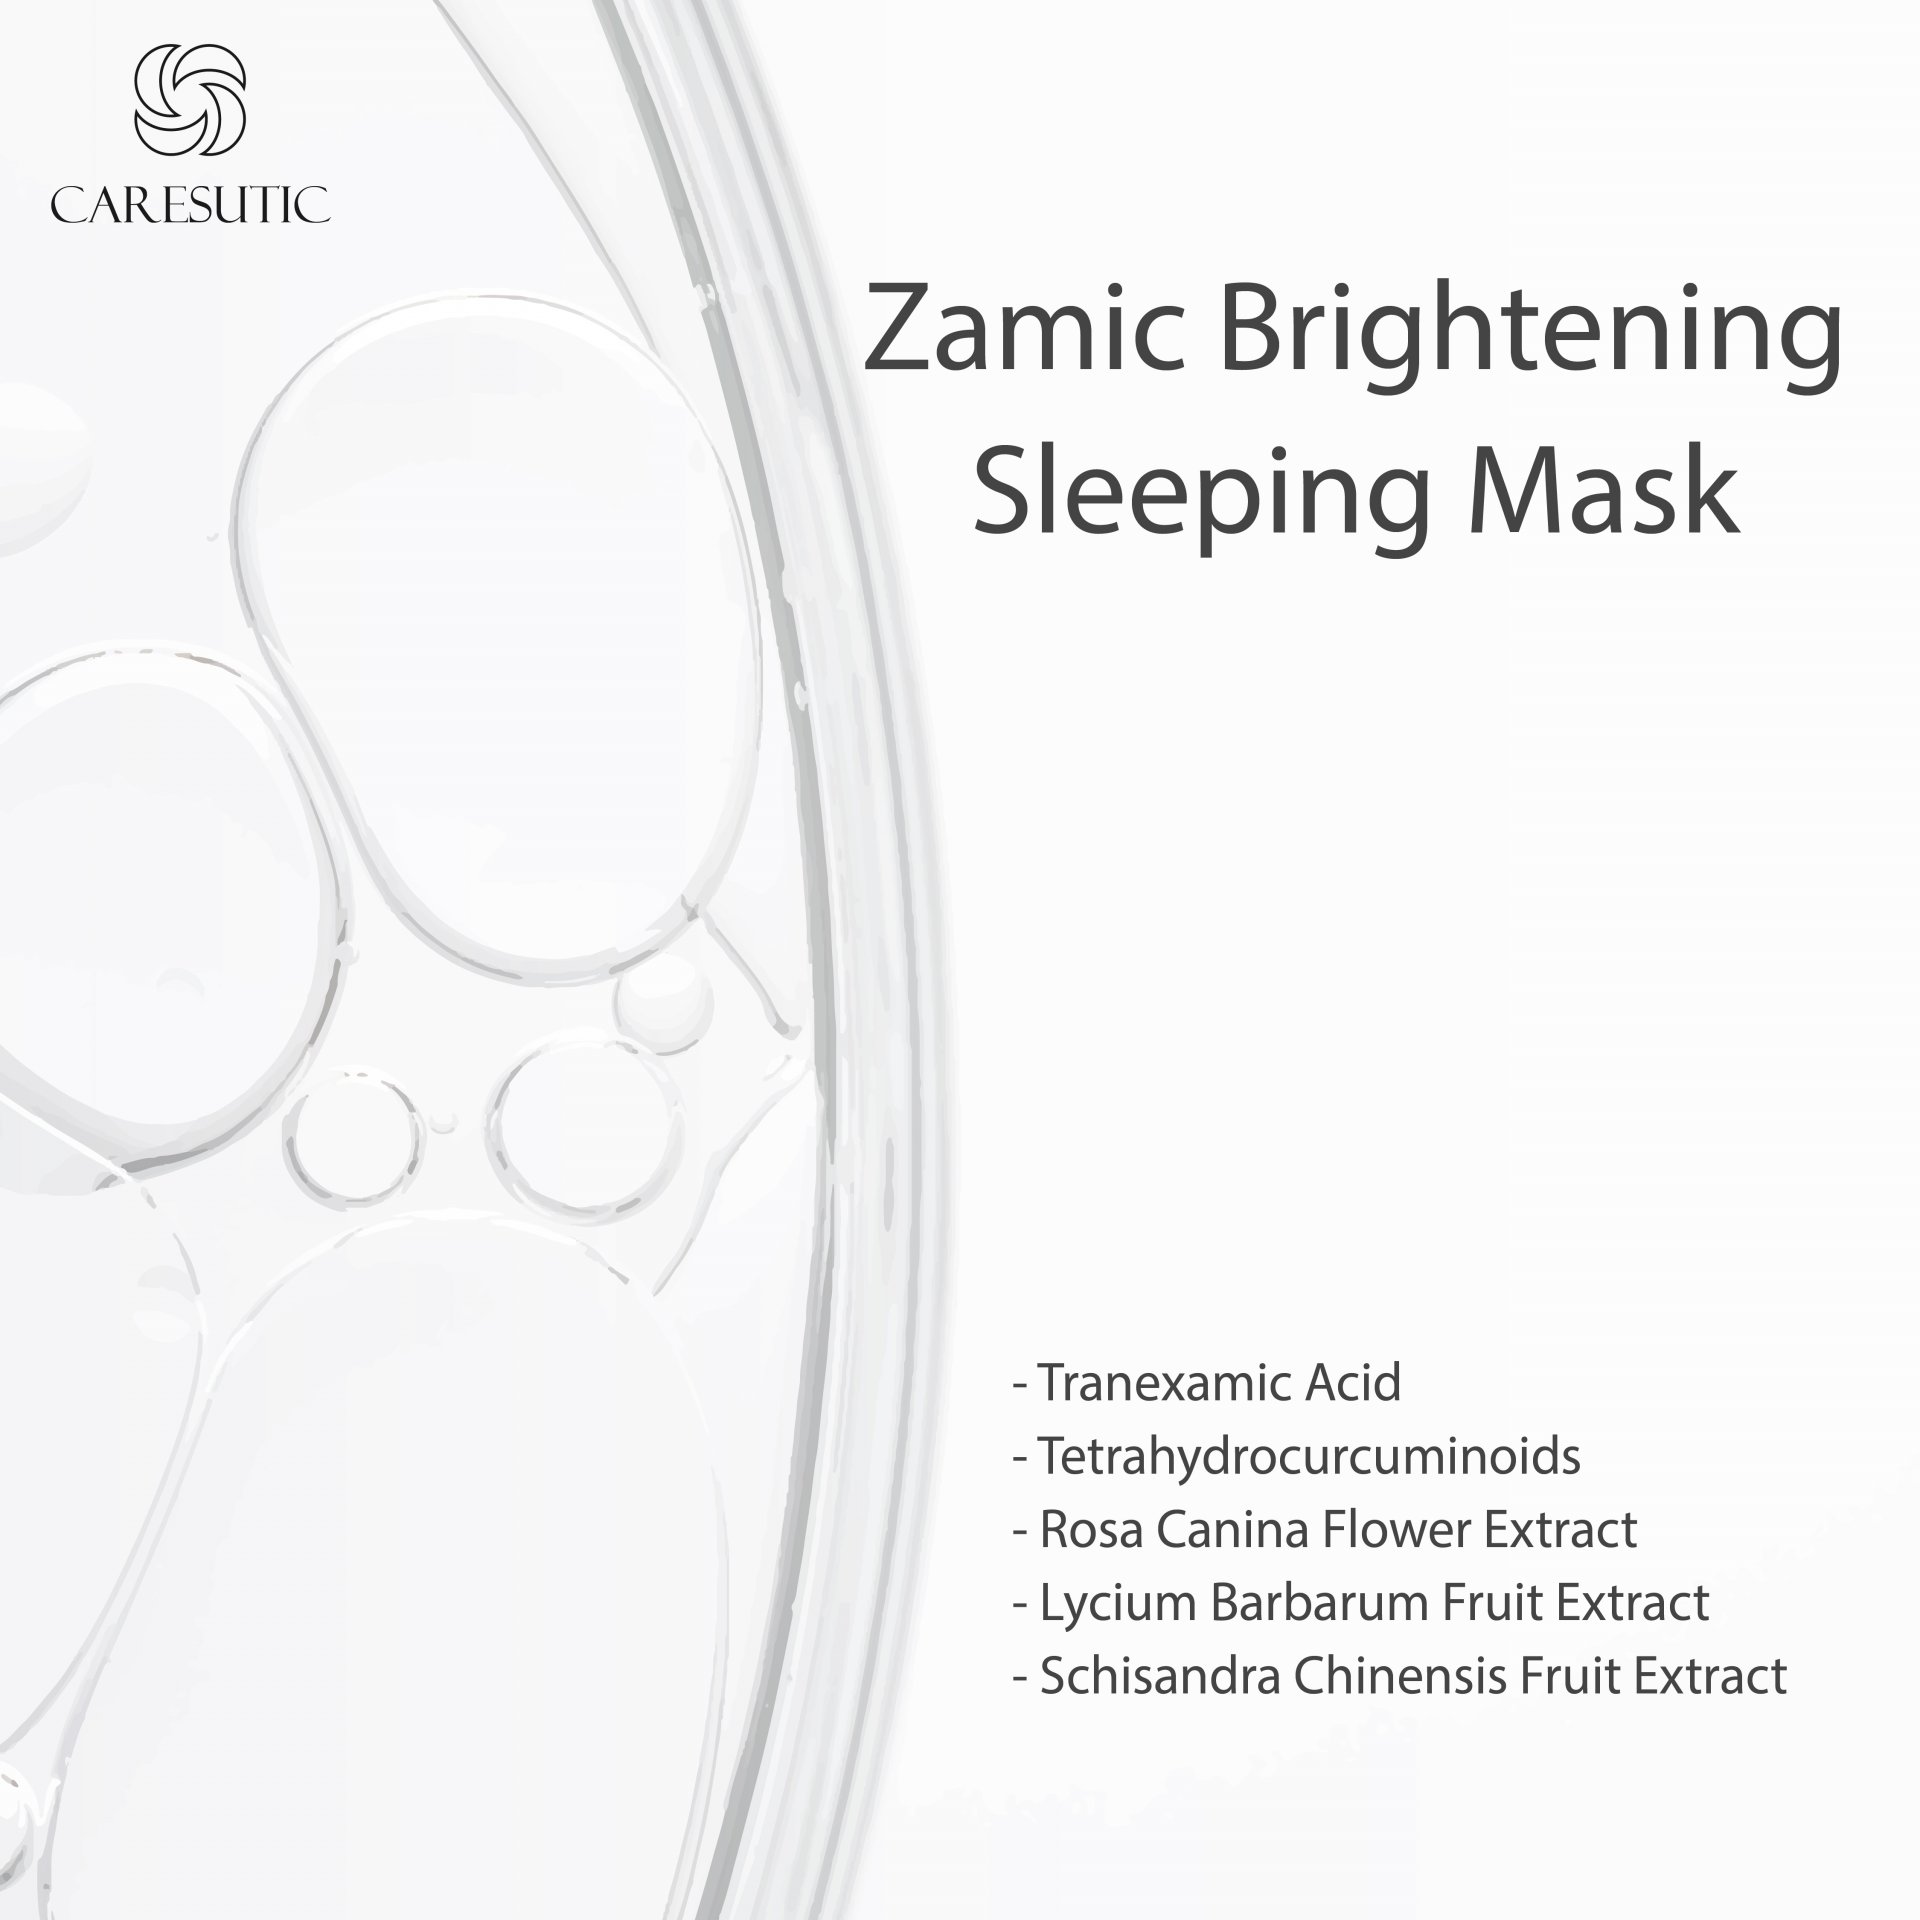 Zamic Brightening Sleeping Mask